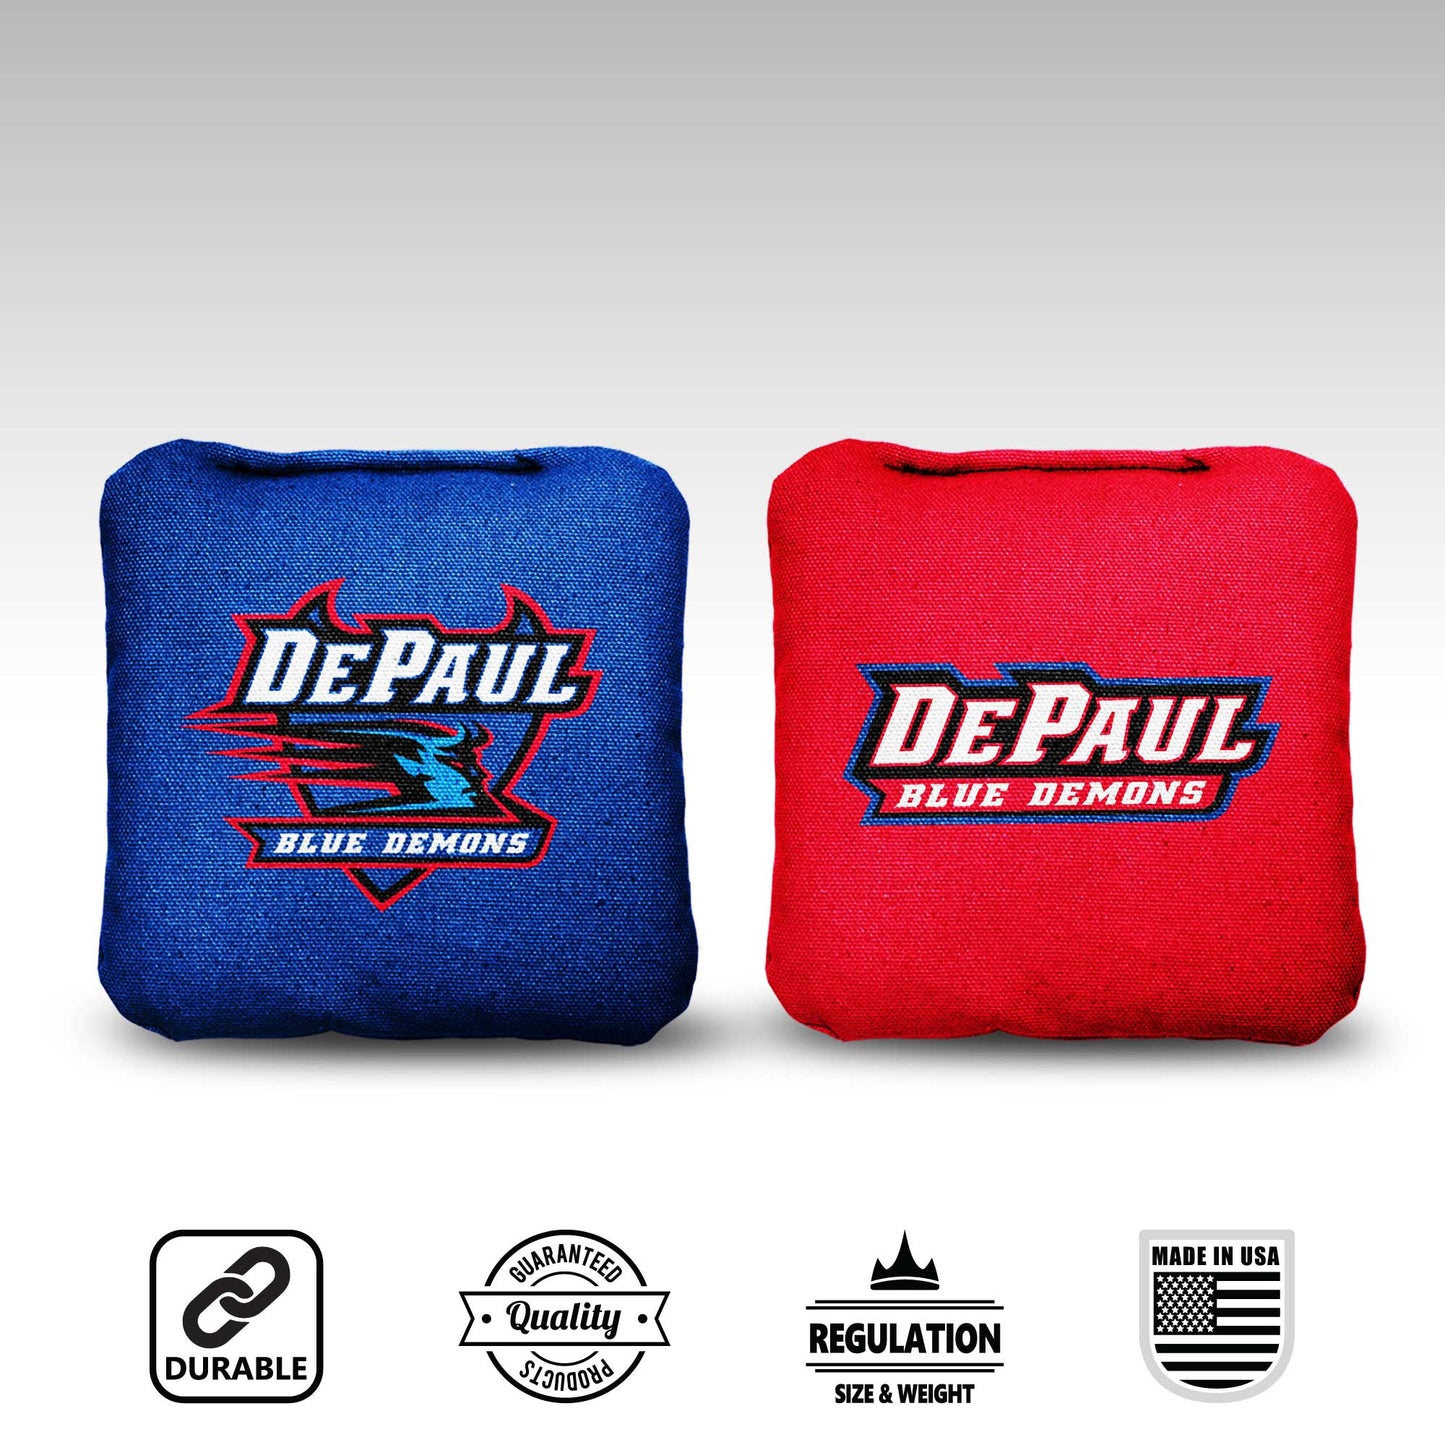 DePaul University Cornhole Bags - 8 Cornhole Bags